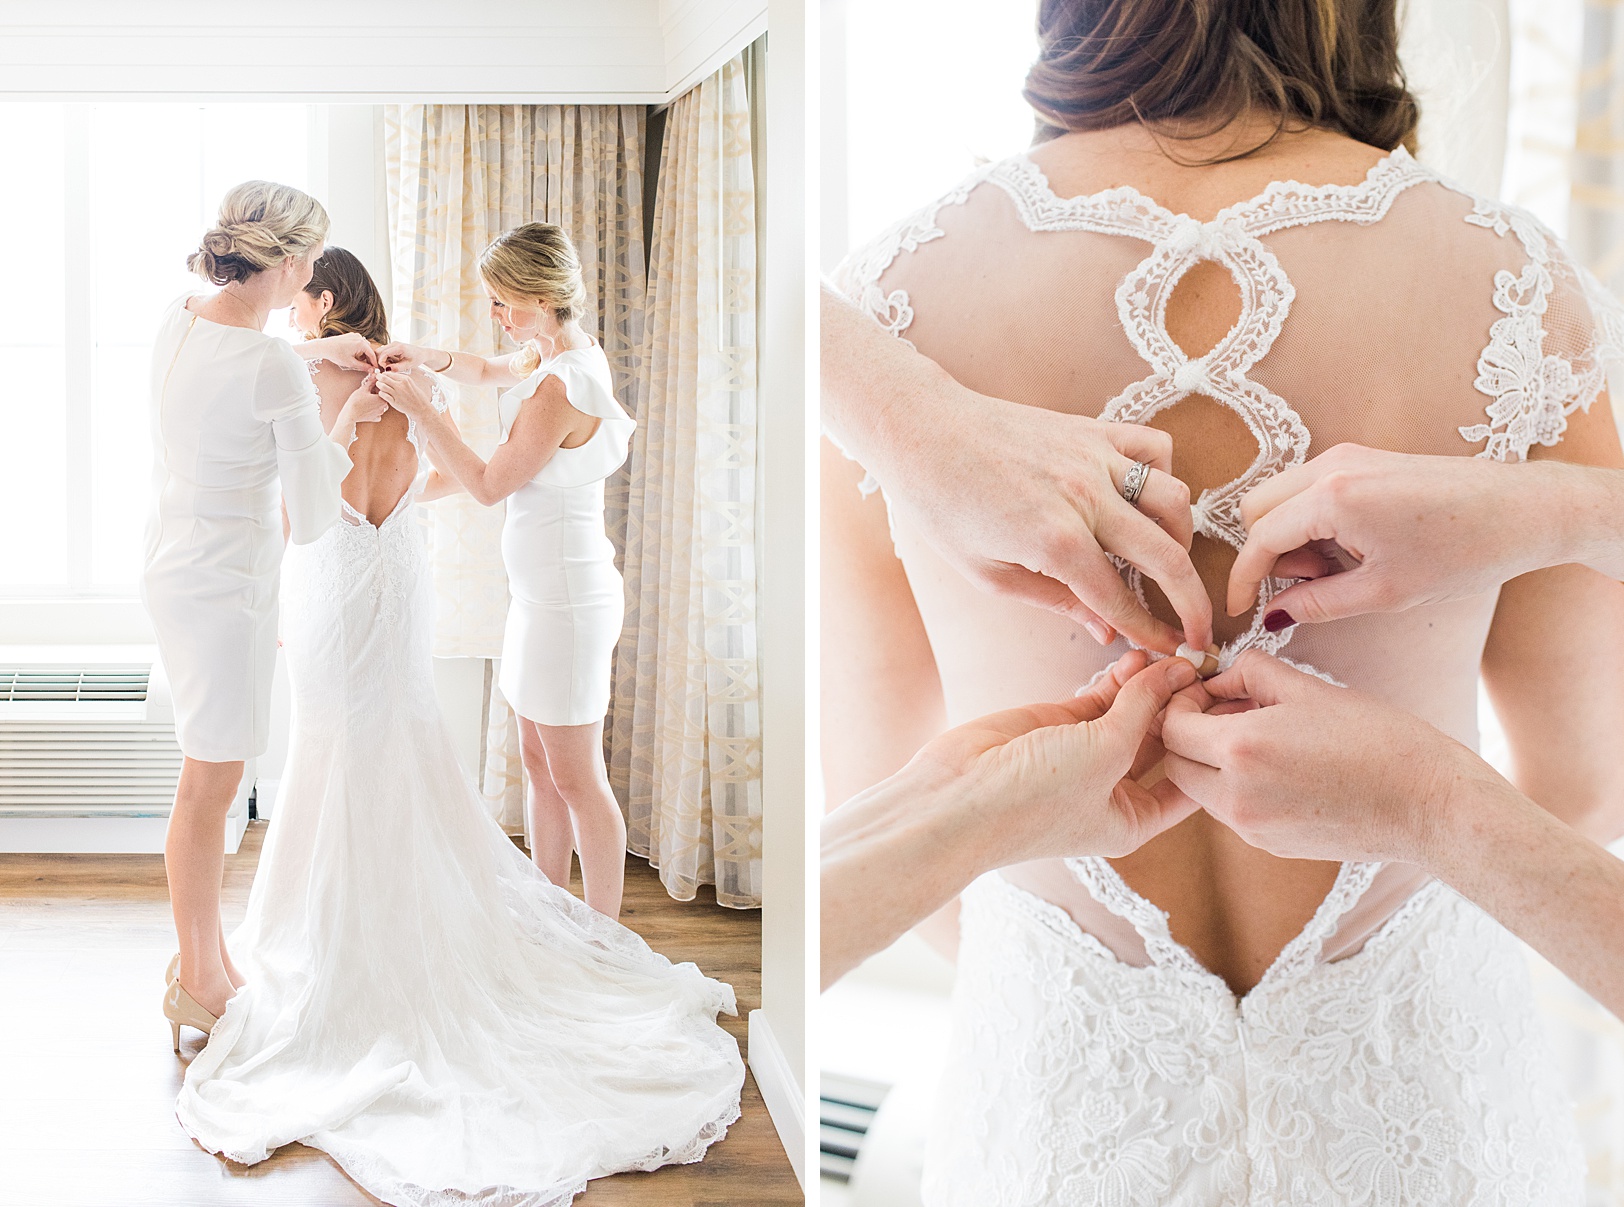 Bride Getting Ready | Charleston Wedding Photography by Kaitlin Scott